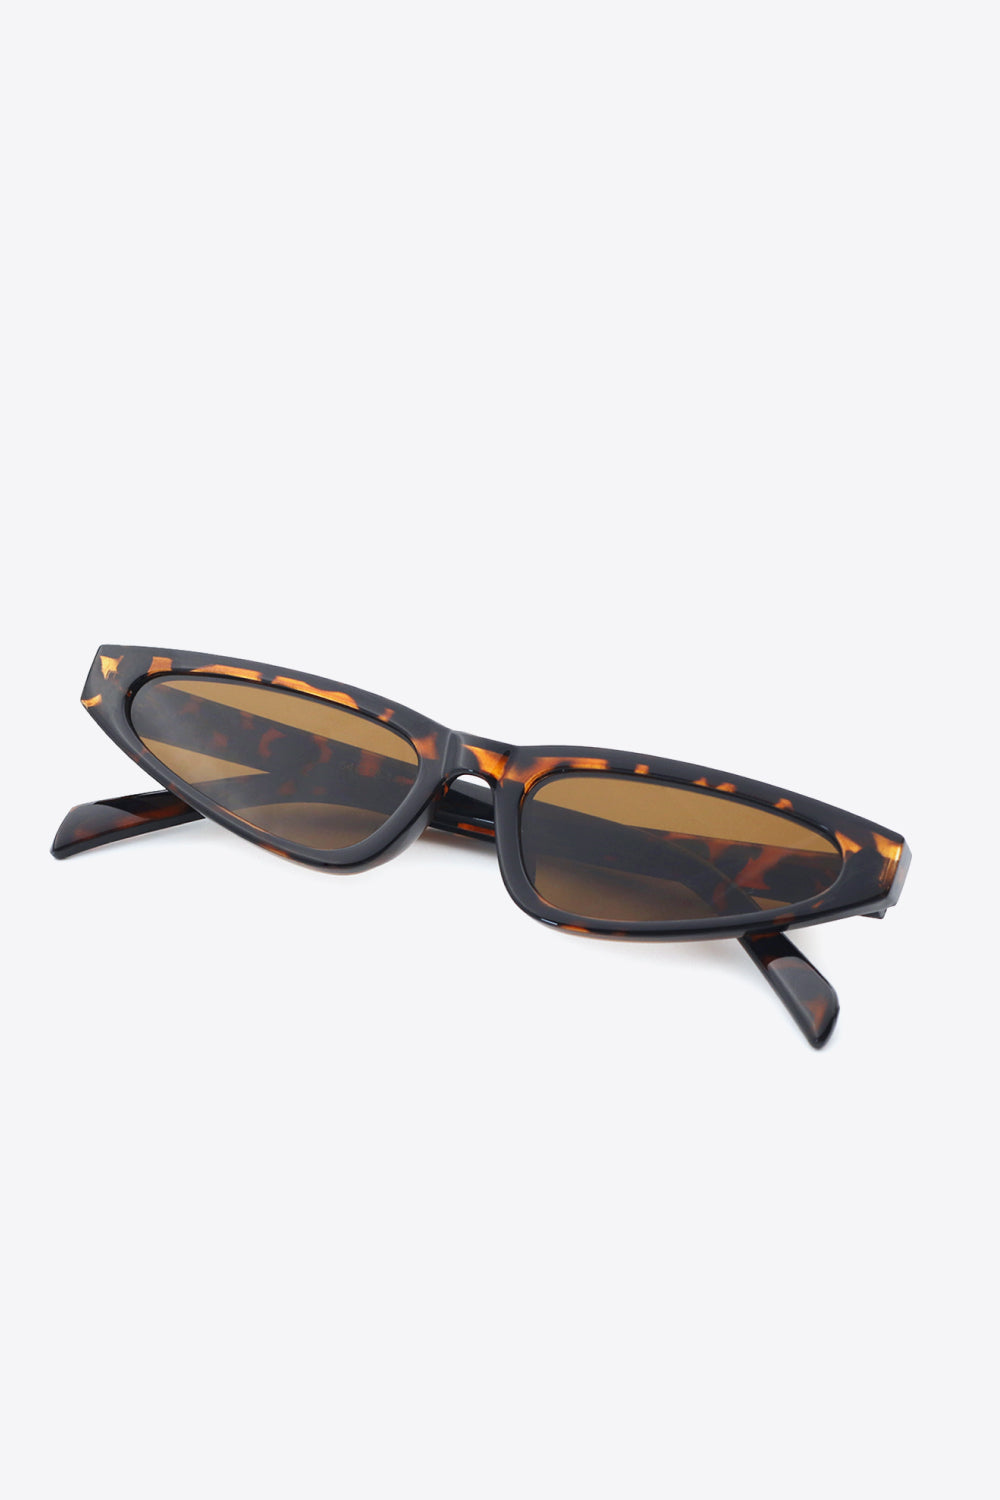 White Smoke Polycarbonate Frame UV400 Cat Eye Sunglasses Sunglasses